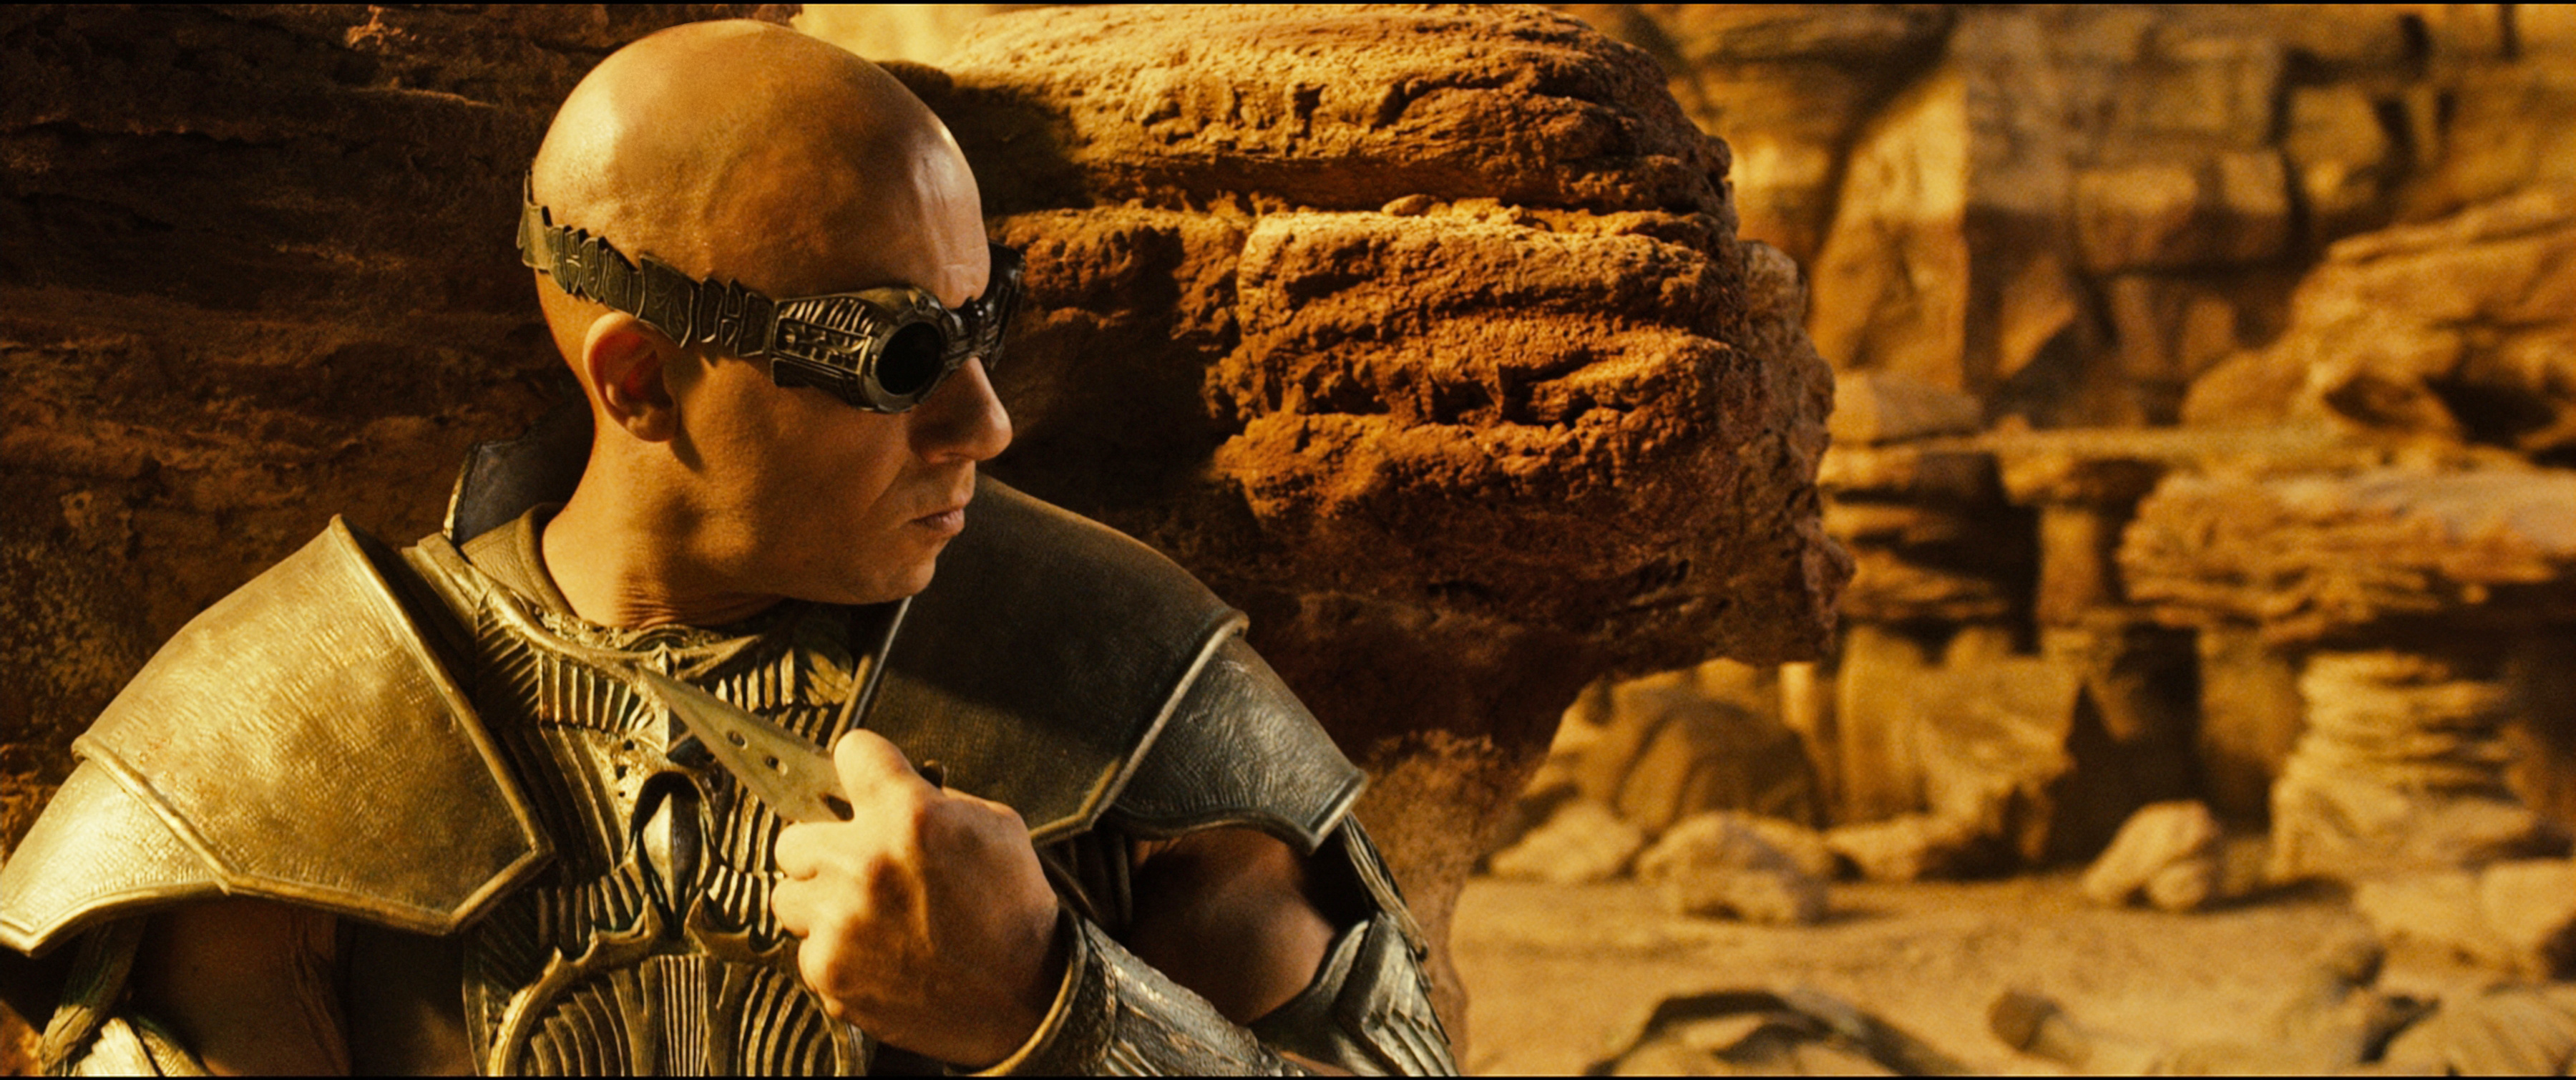 Riddick, wallpapers movie, HQ Riddick, 4K wallpapers, 3600x1510 Dual Screen Desktop